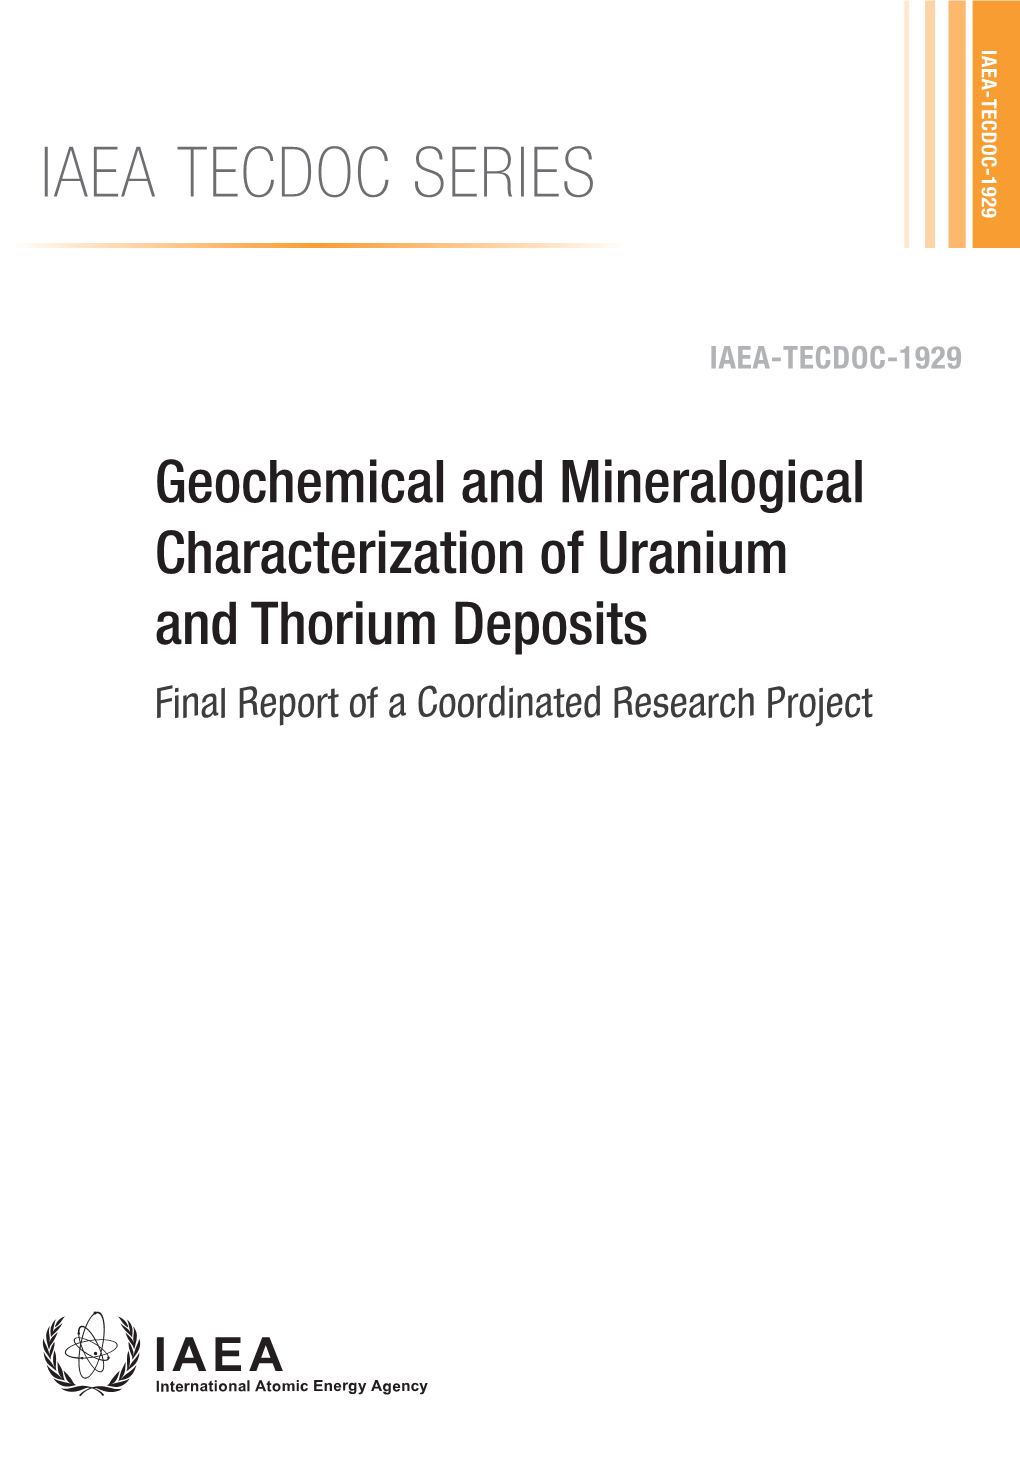 IAEA TECDOC SERIES Geochemical and Mineralogical Characterization of Uranium and Geochemical and Mineralogical Characterization Thorium Deposits